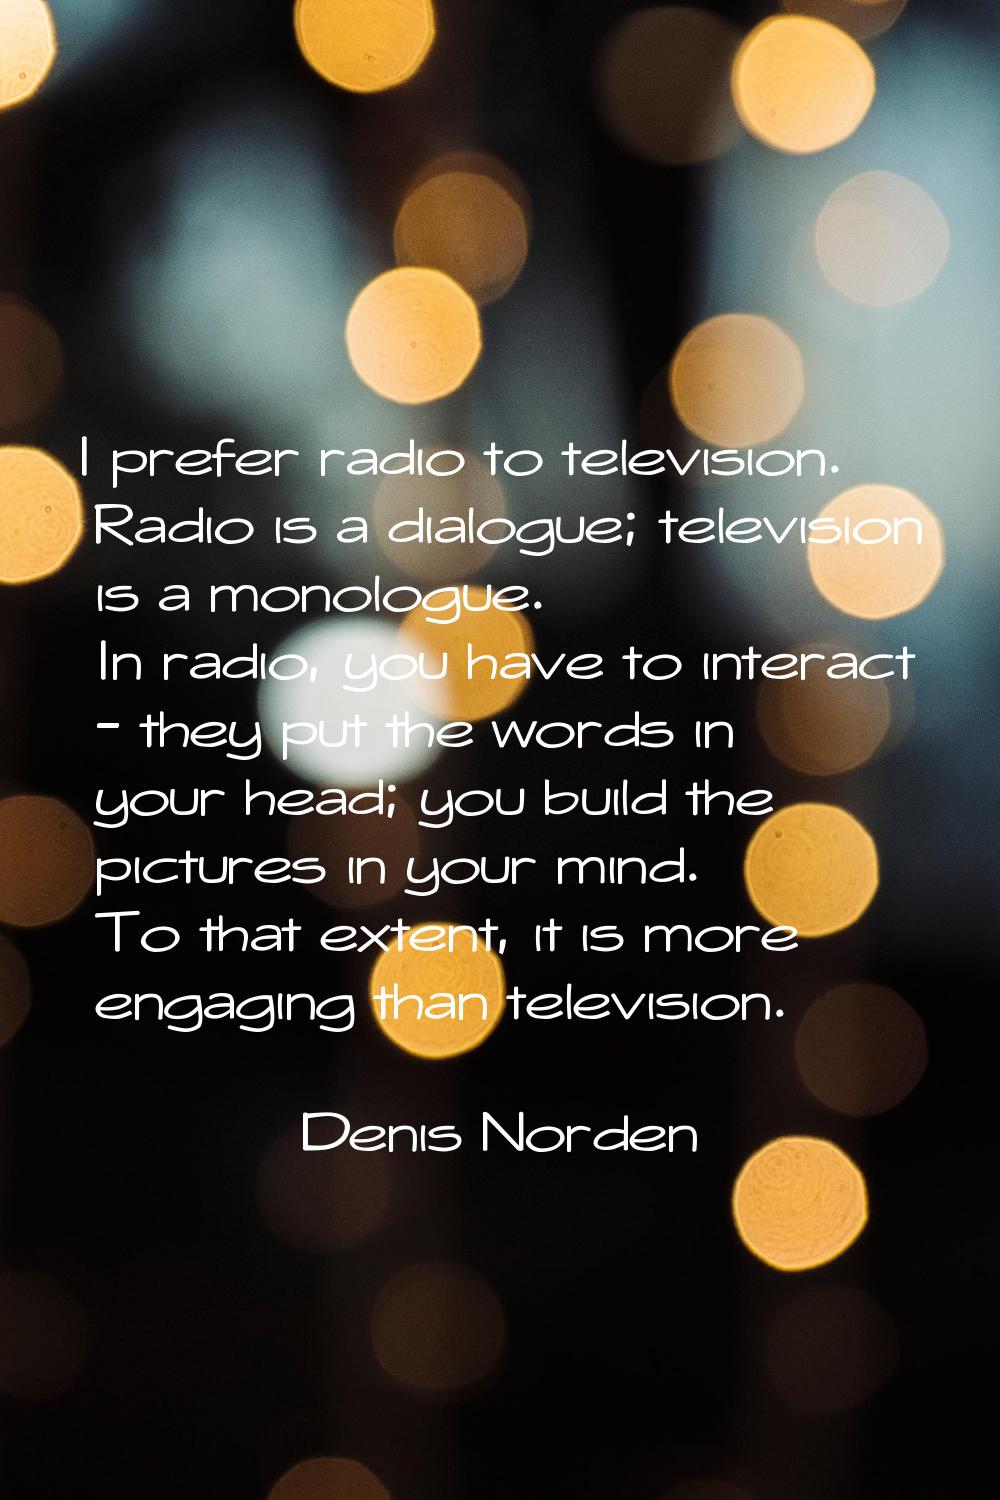 I prefer radio to television. Radio is a dialogue; television is a monologue. In radio, you have to